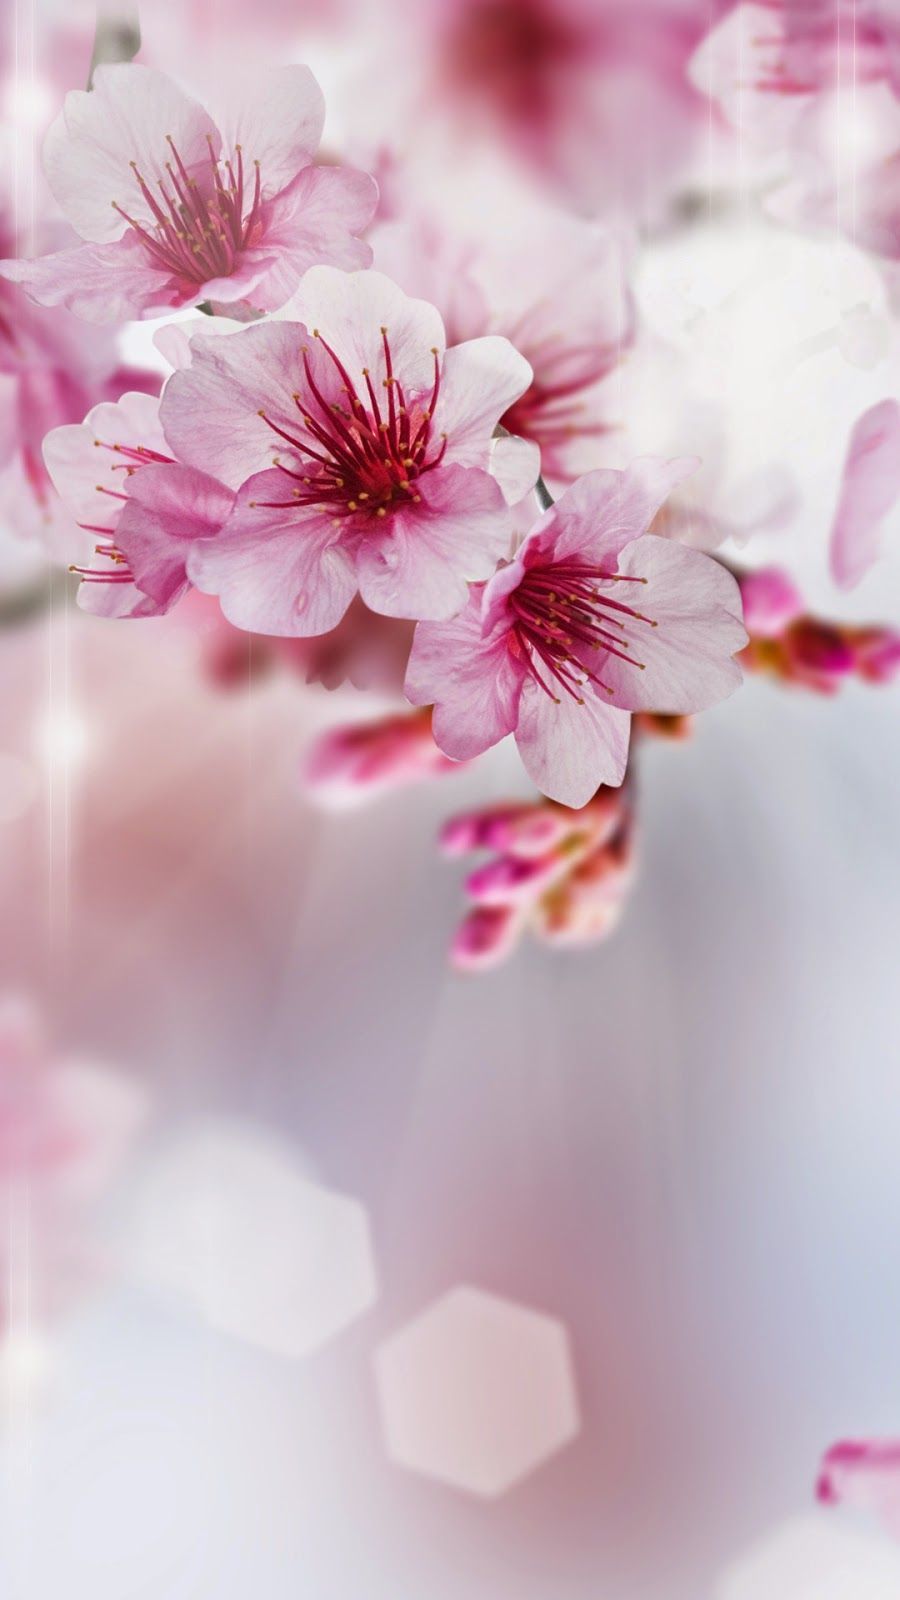 Flower Background IPhone